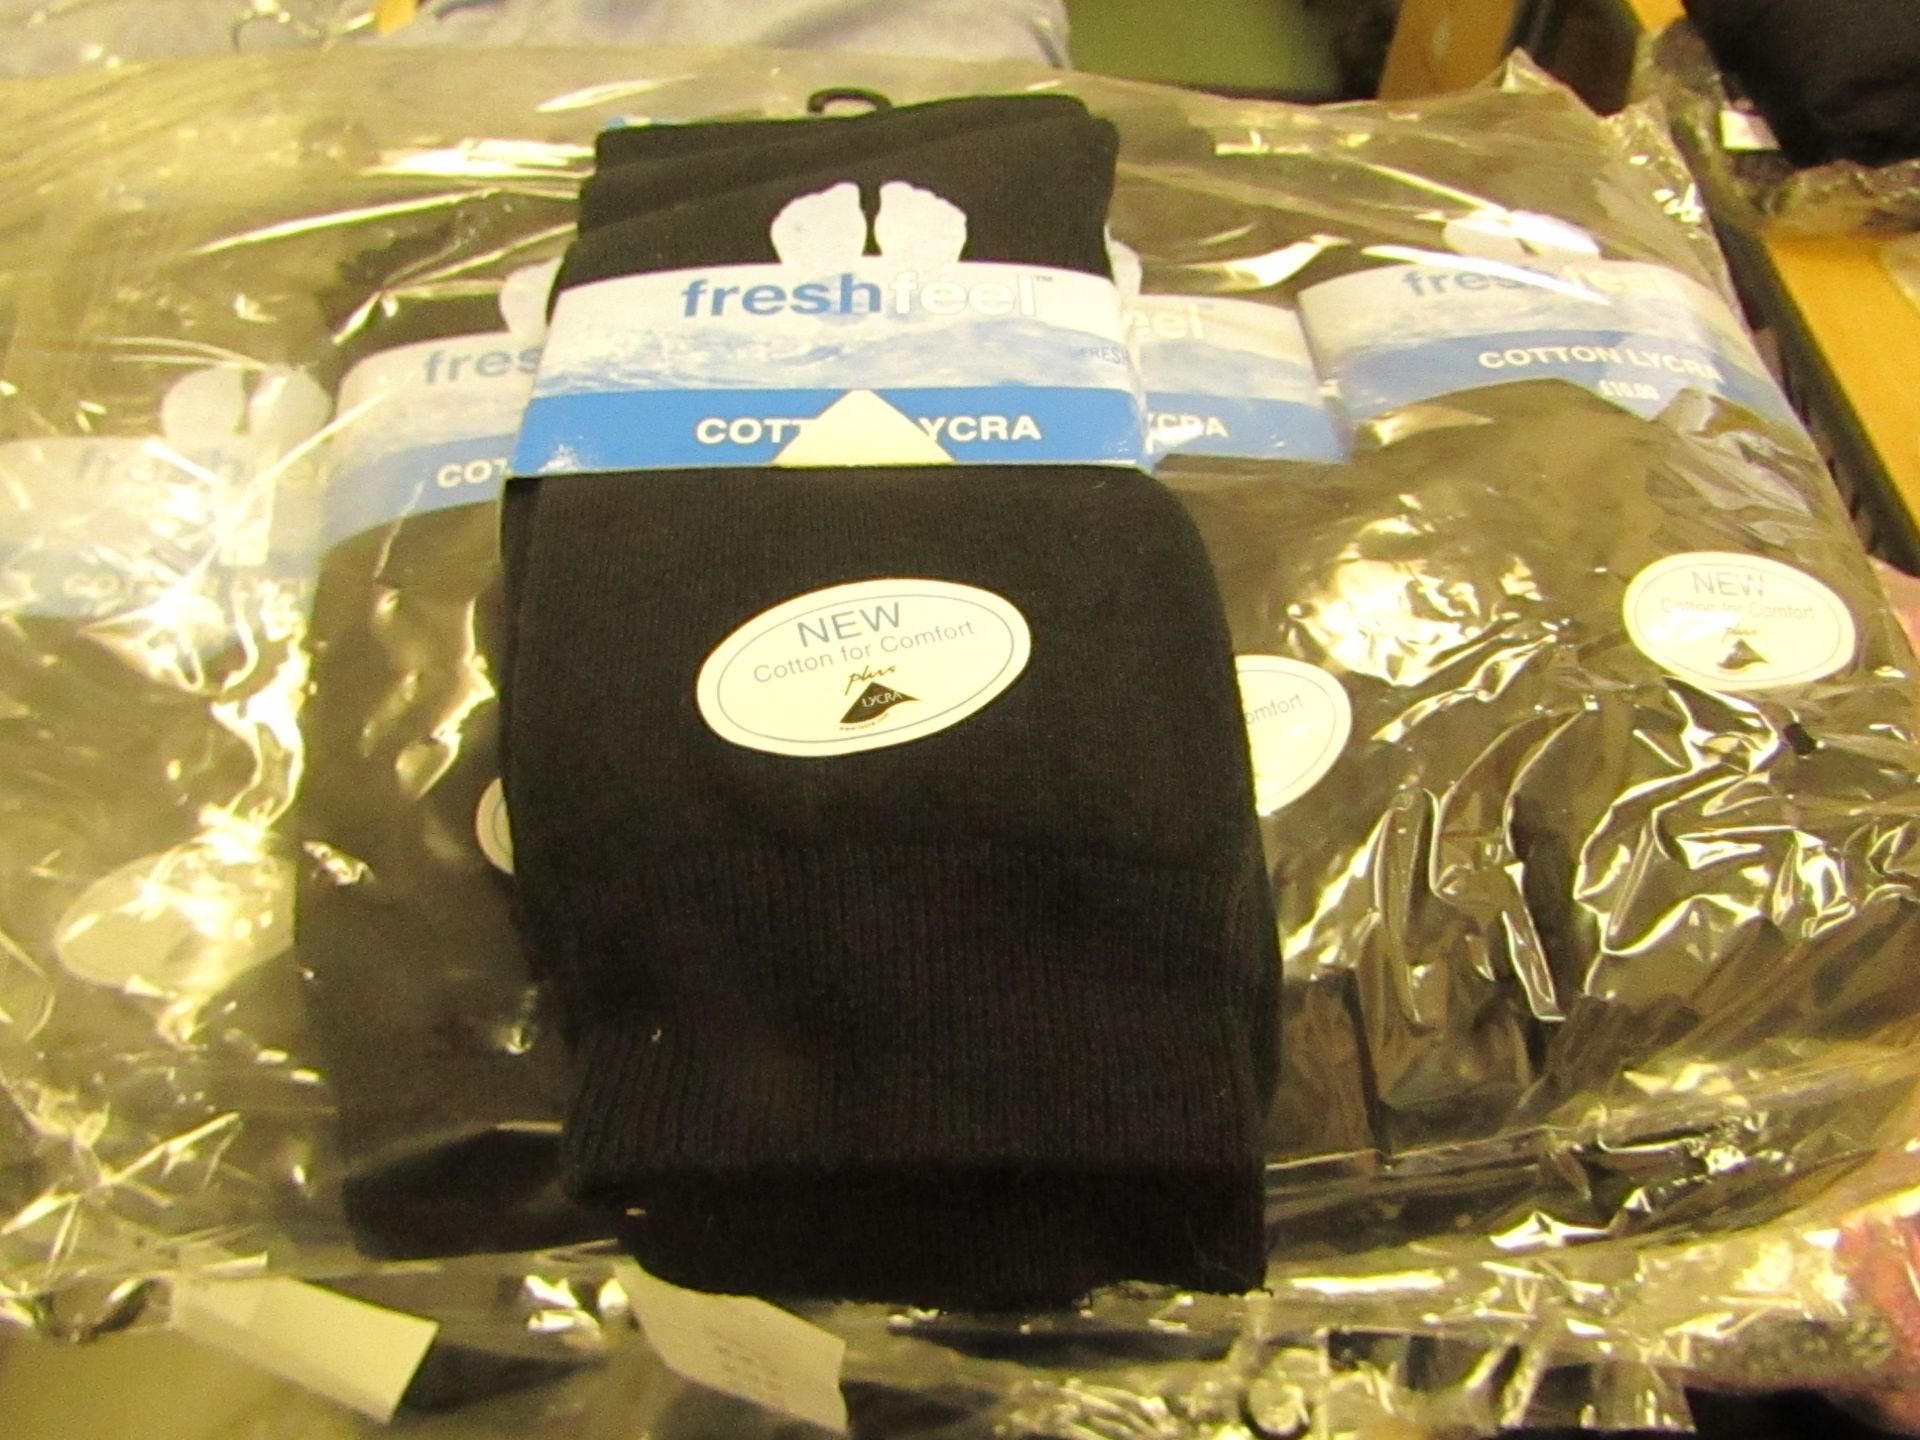 12 x Fresh feel Cotton Lycra Mens Black Socks size 6-11 new & packaged